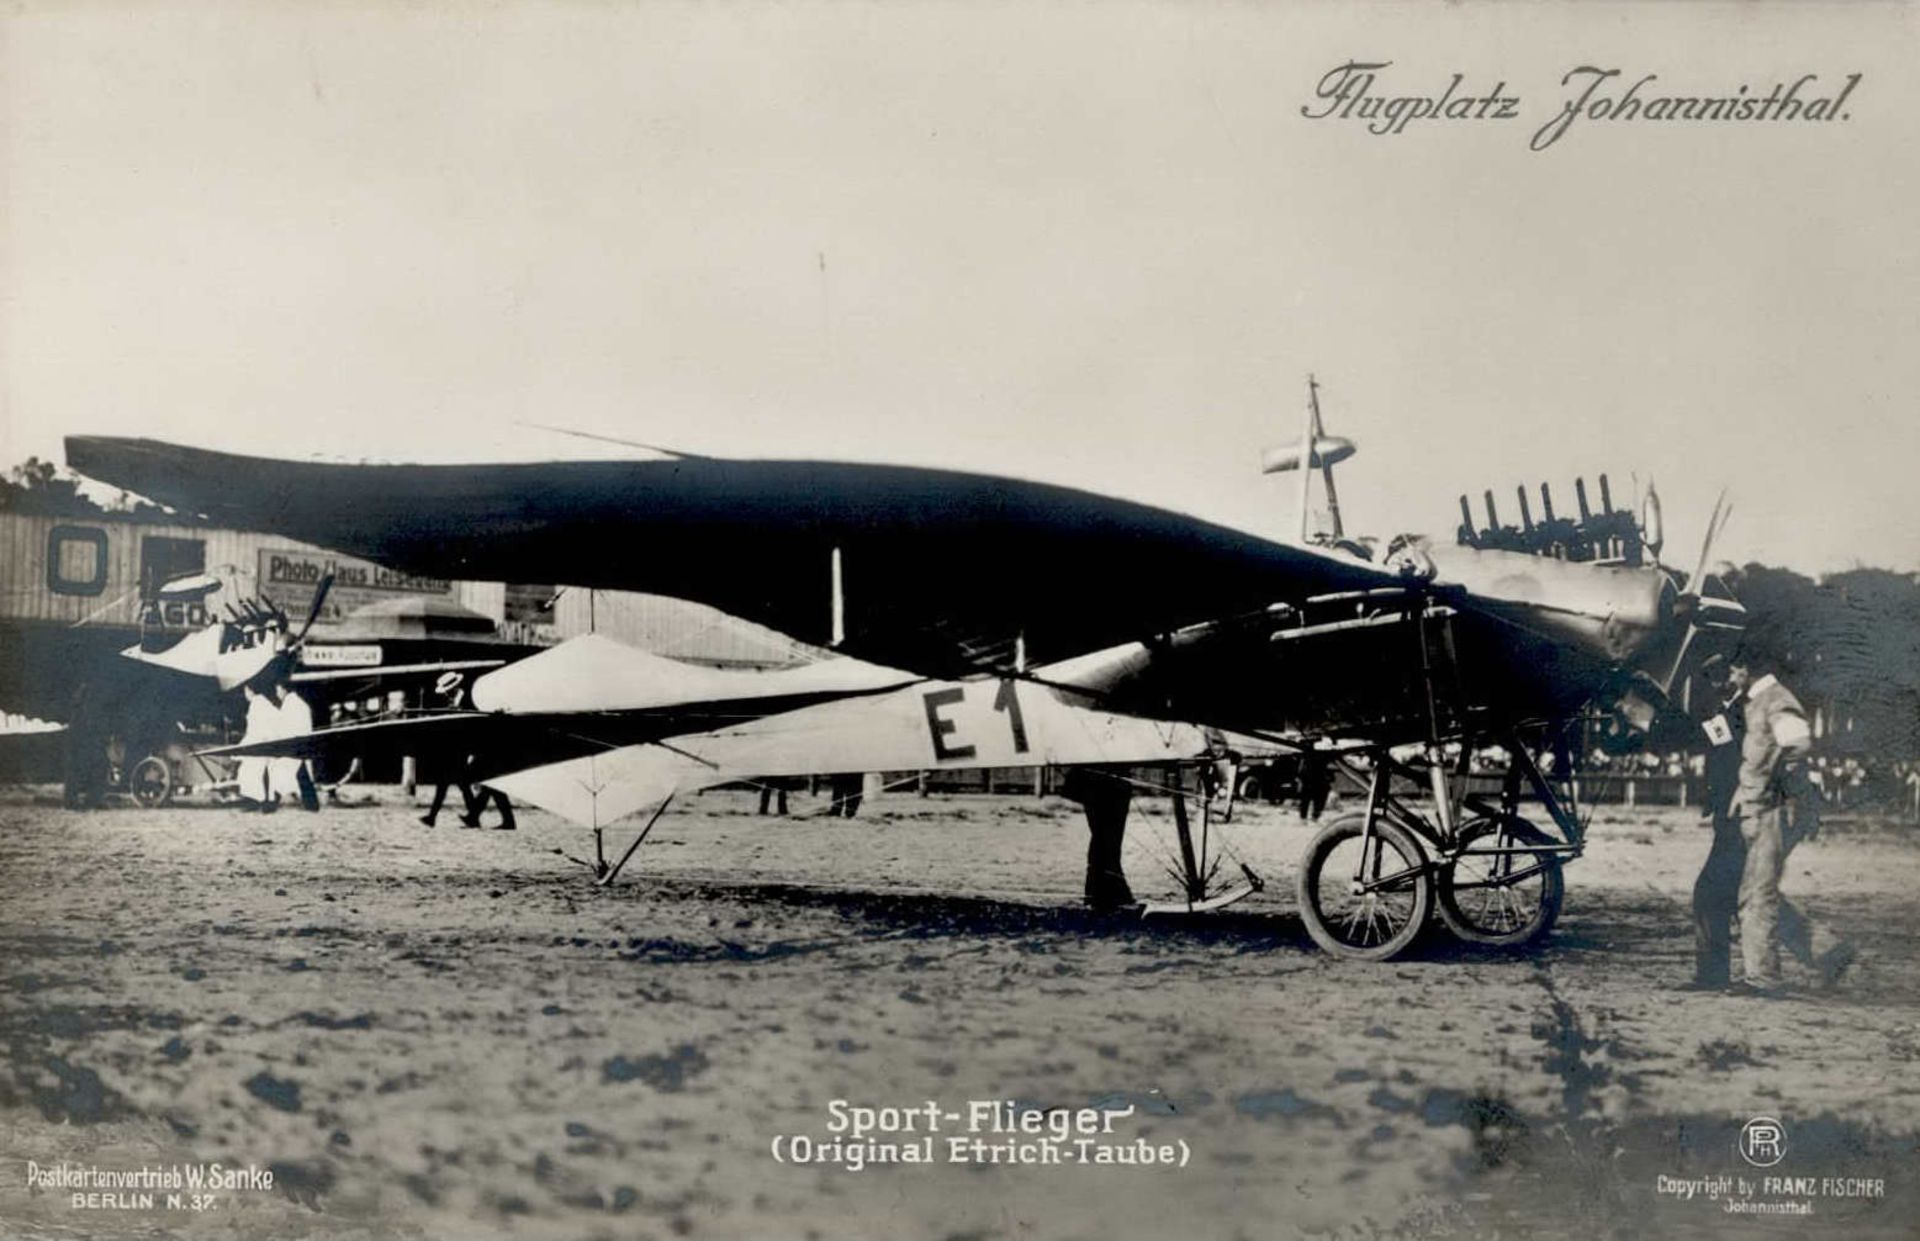 Sanke Flugzeug Johannisthal Sport-Flieger Original Etrich-Taube I-II